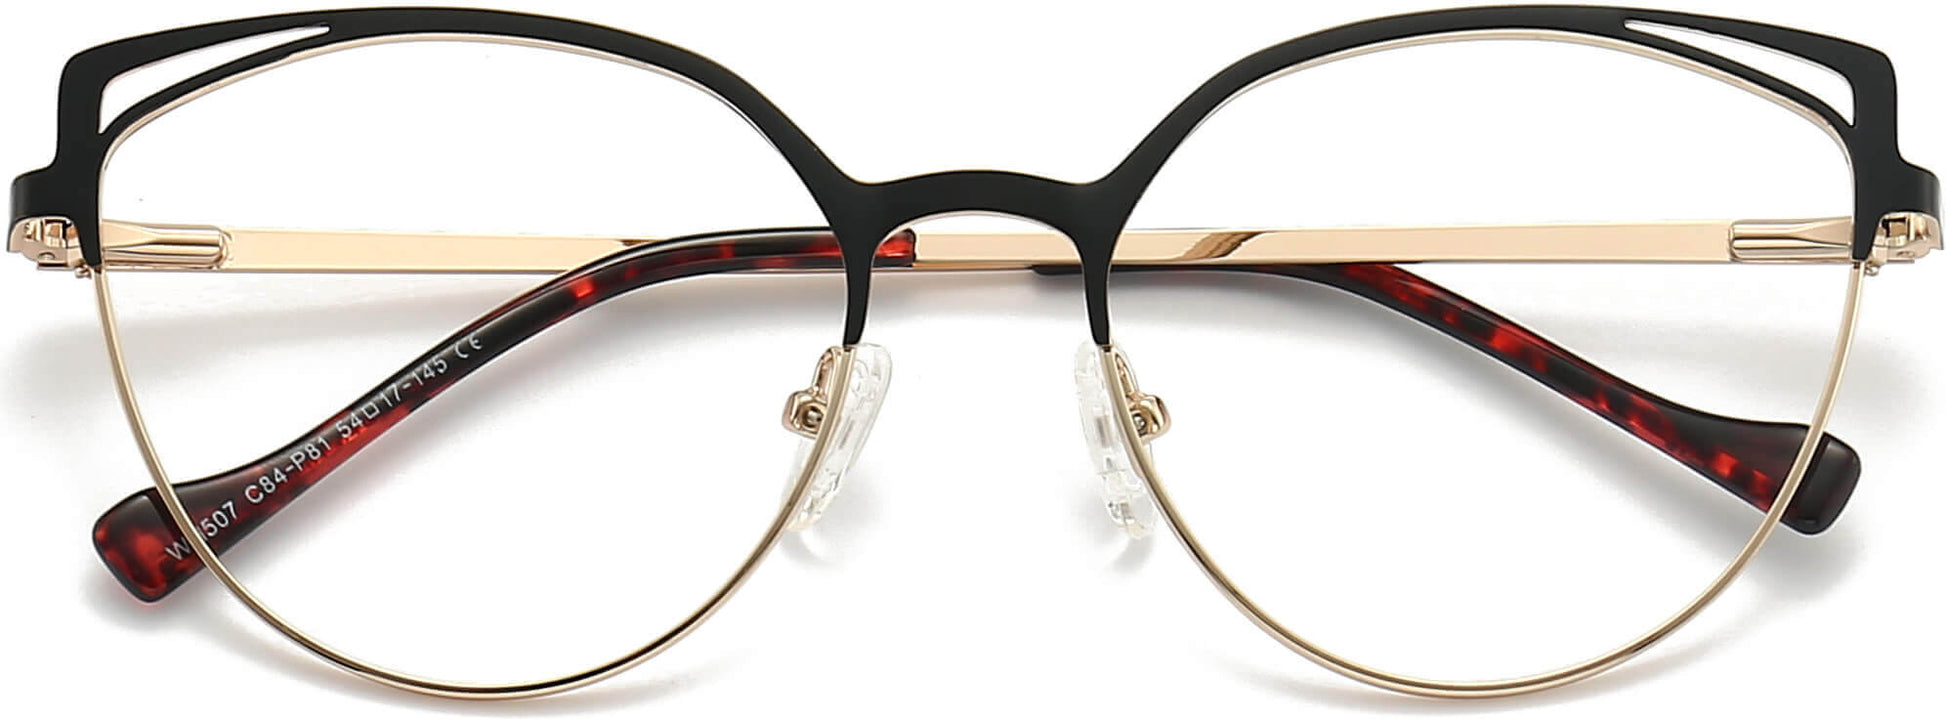 Margaret Cateye Black Eyeglasses from ANRRI, closed view